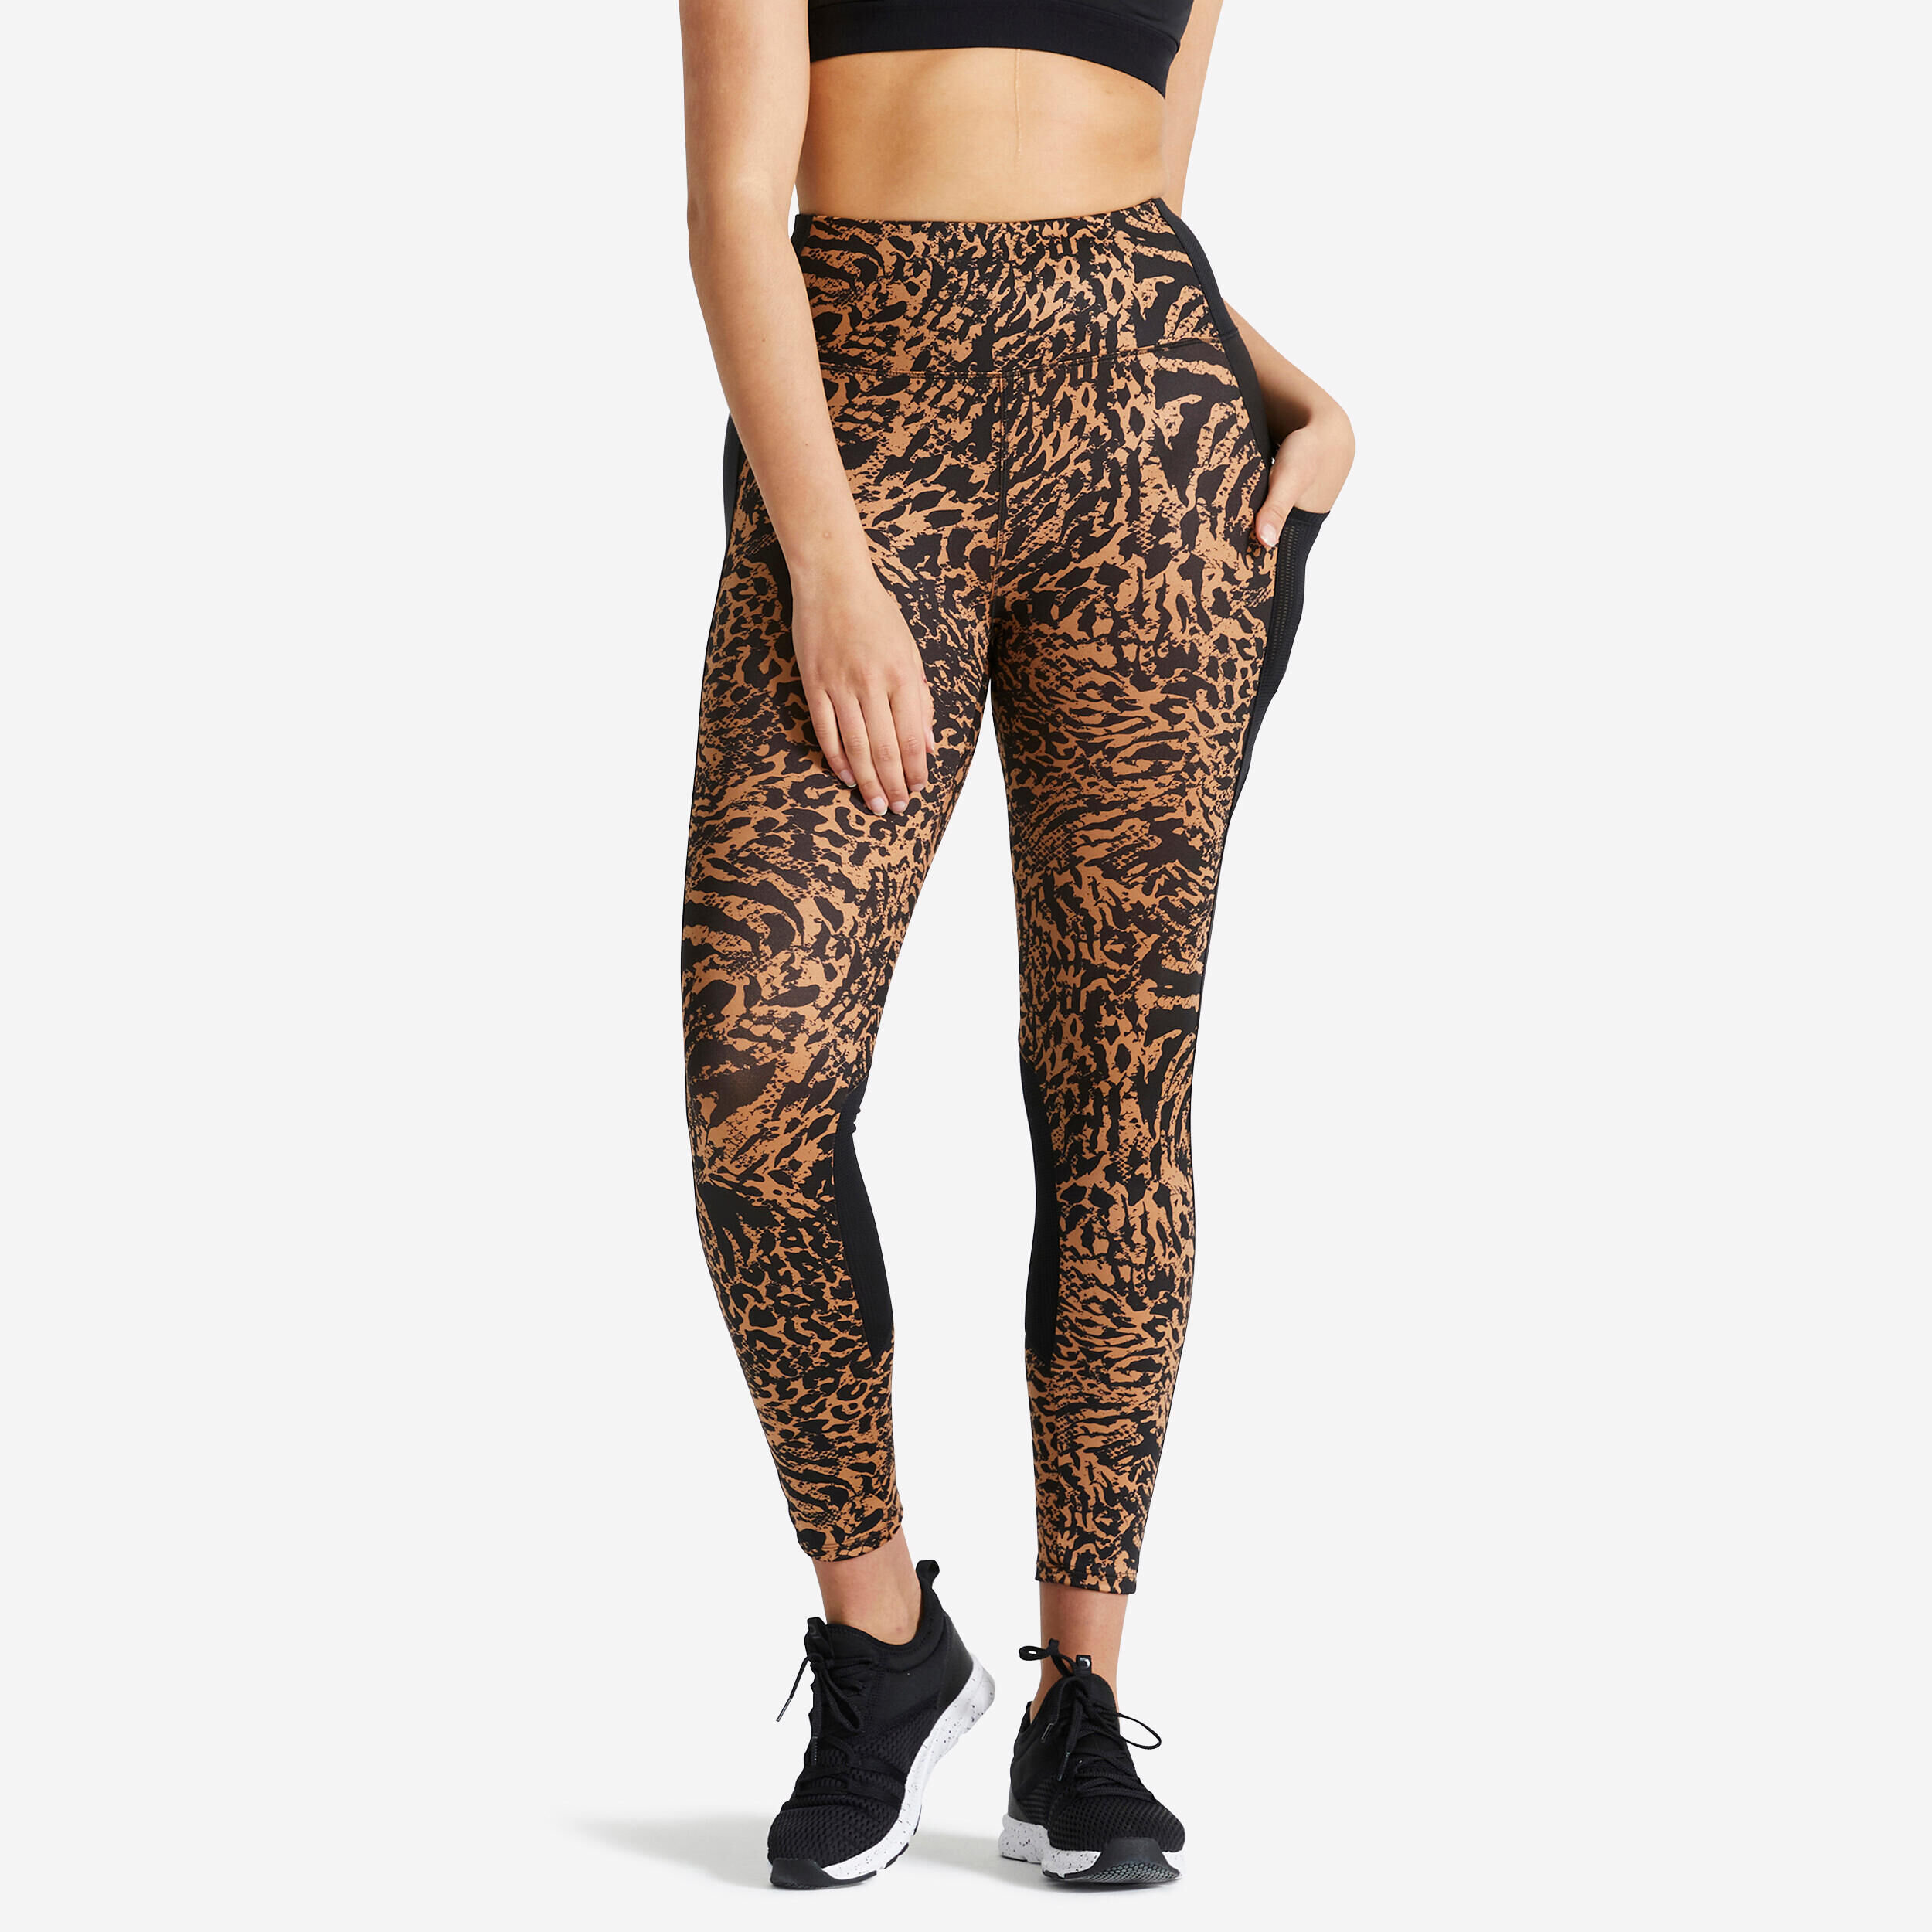 DOMYOS Women's phone pocket fitness high-waisted leggings, leopard print